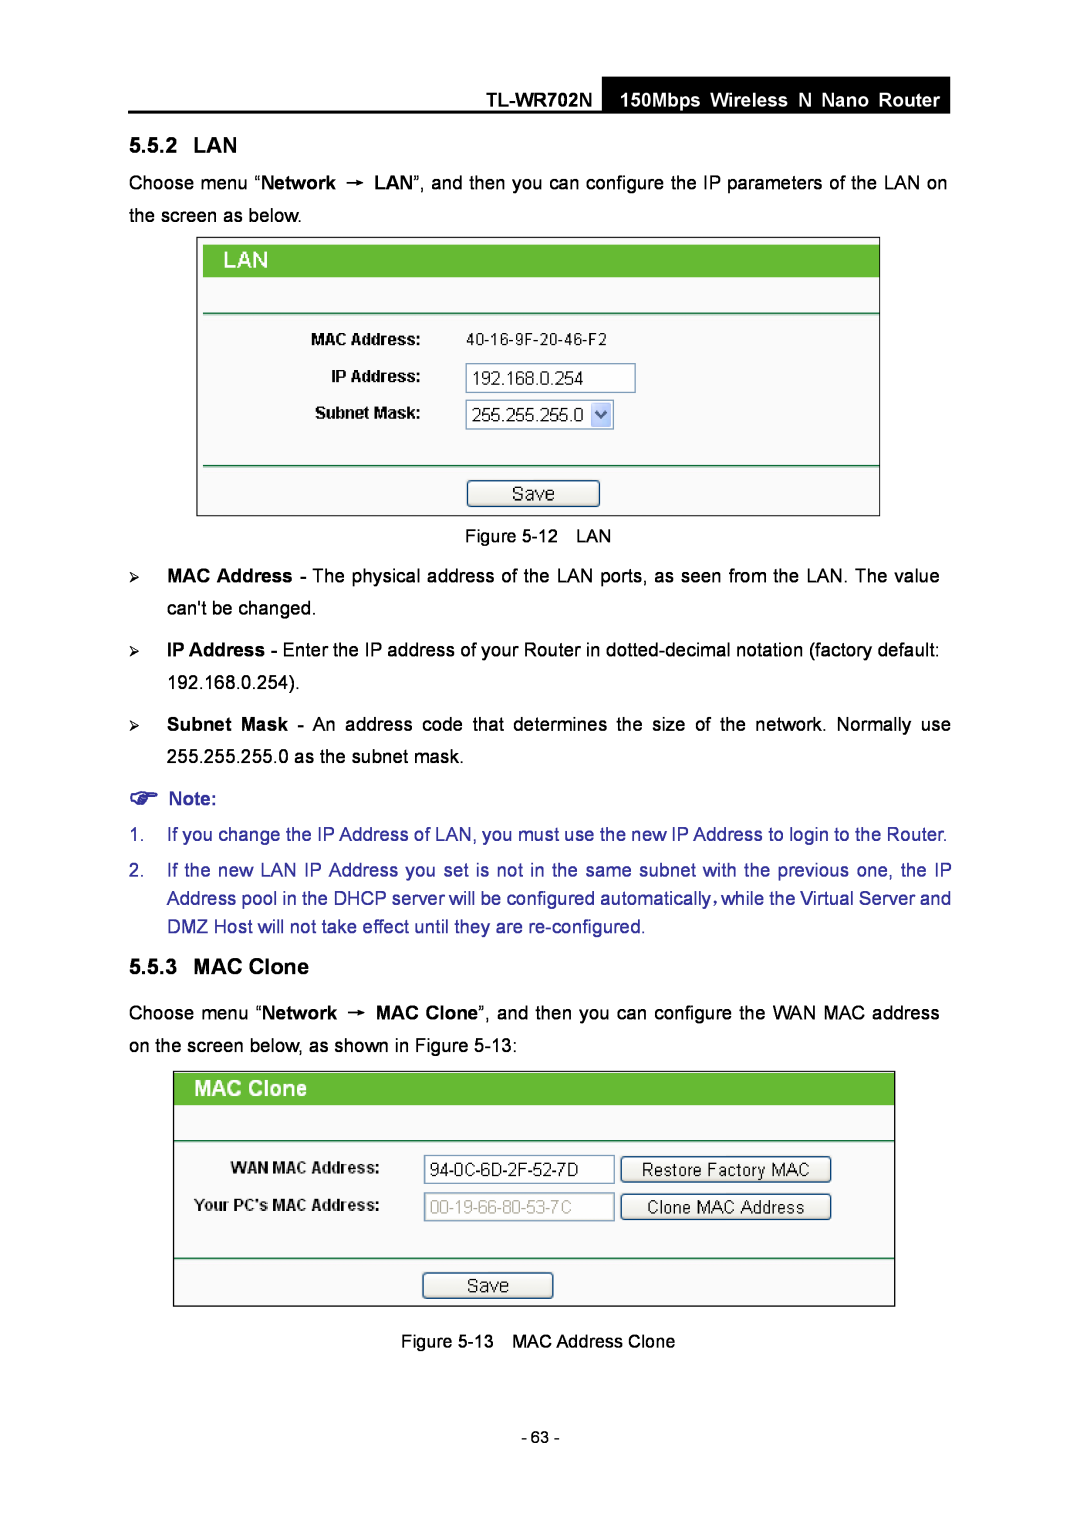 TP-Link TL-WR702N manual 5.5.2 LAN, MAC Clone, 150Mbps Wireless N Nano Router, 12 LAN, 13 MAC Address Clone 